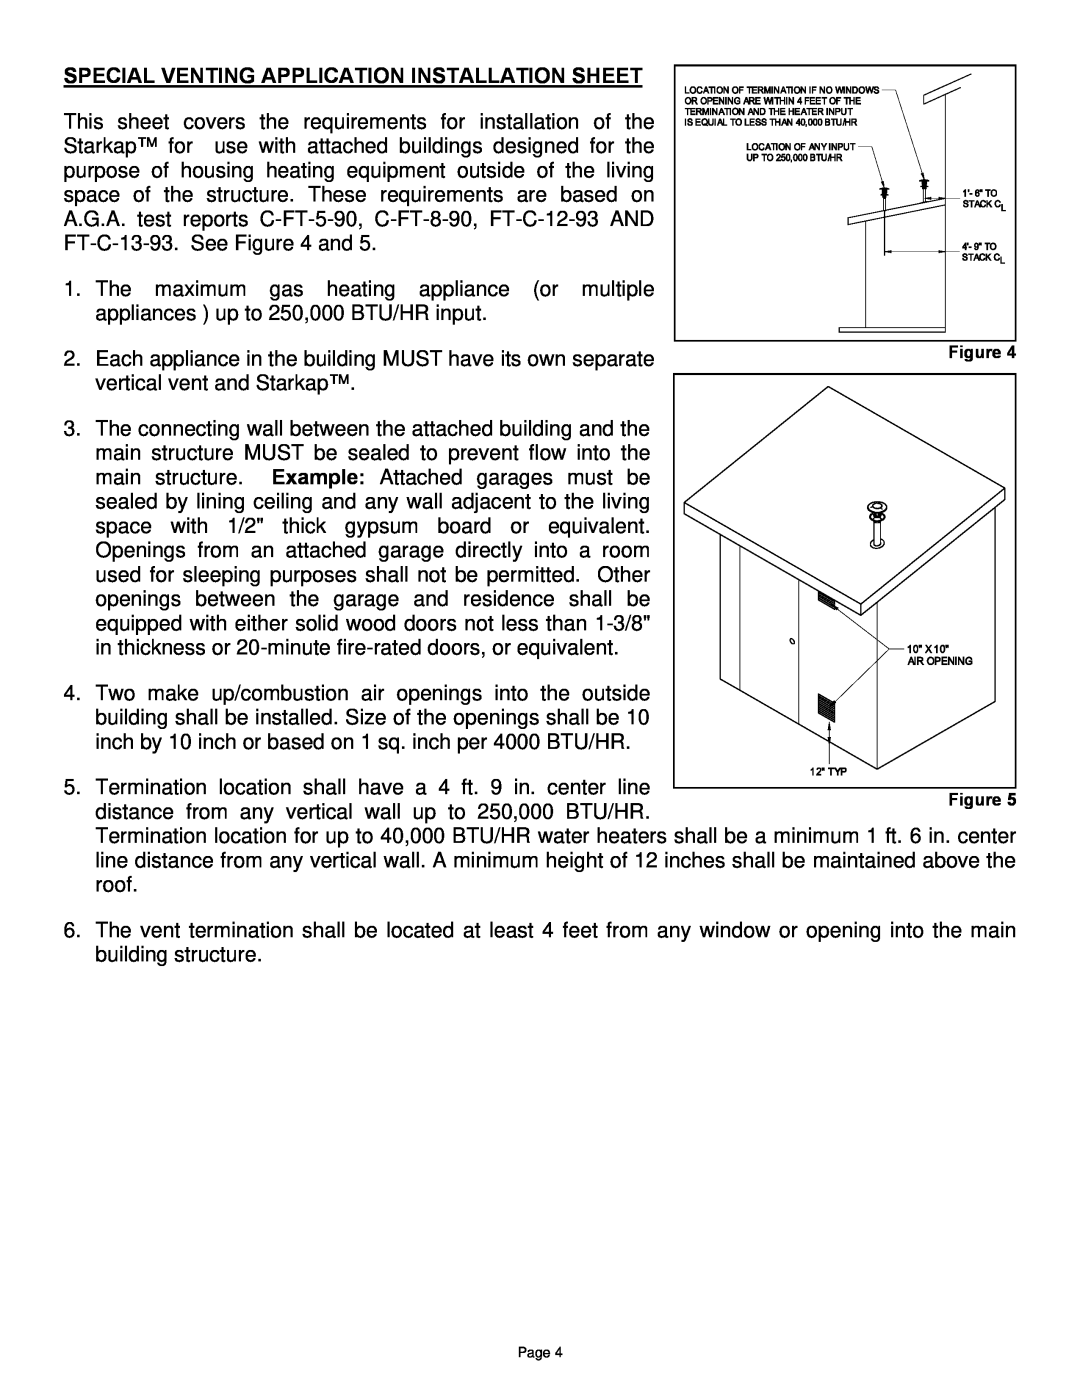 Field Controls SK-1 manual Special Venting Application Installation Sheet 